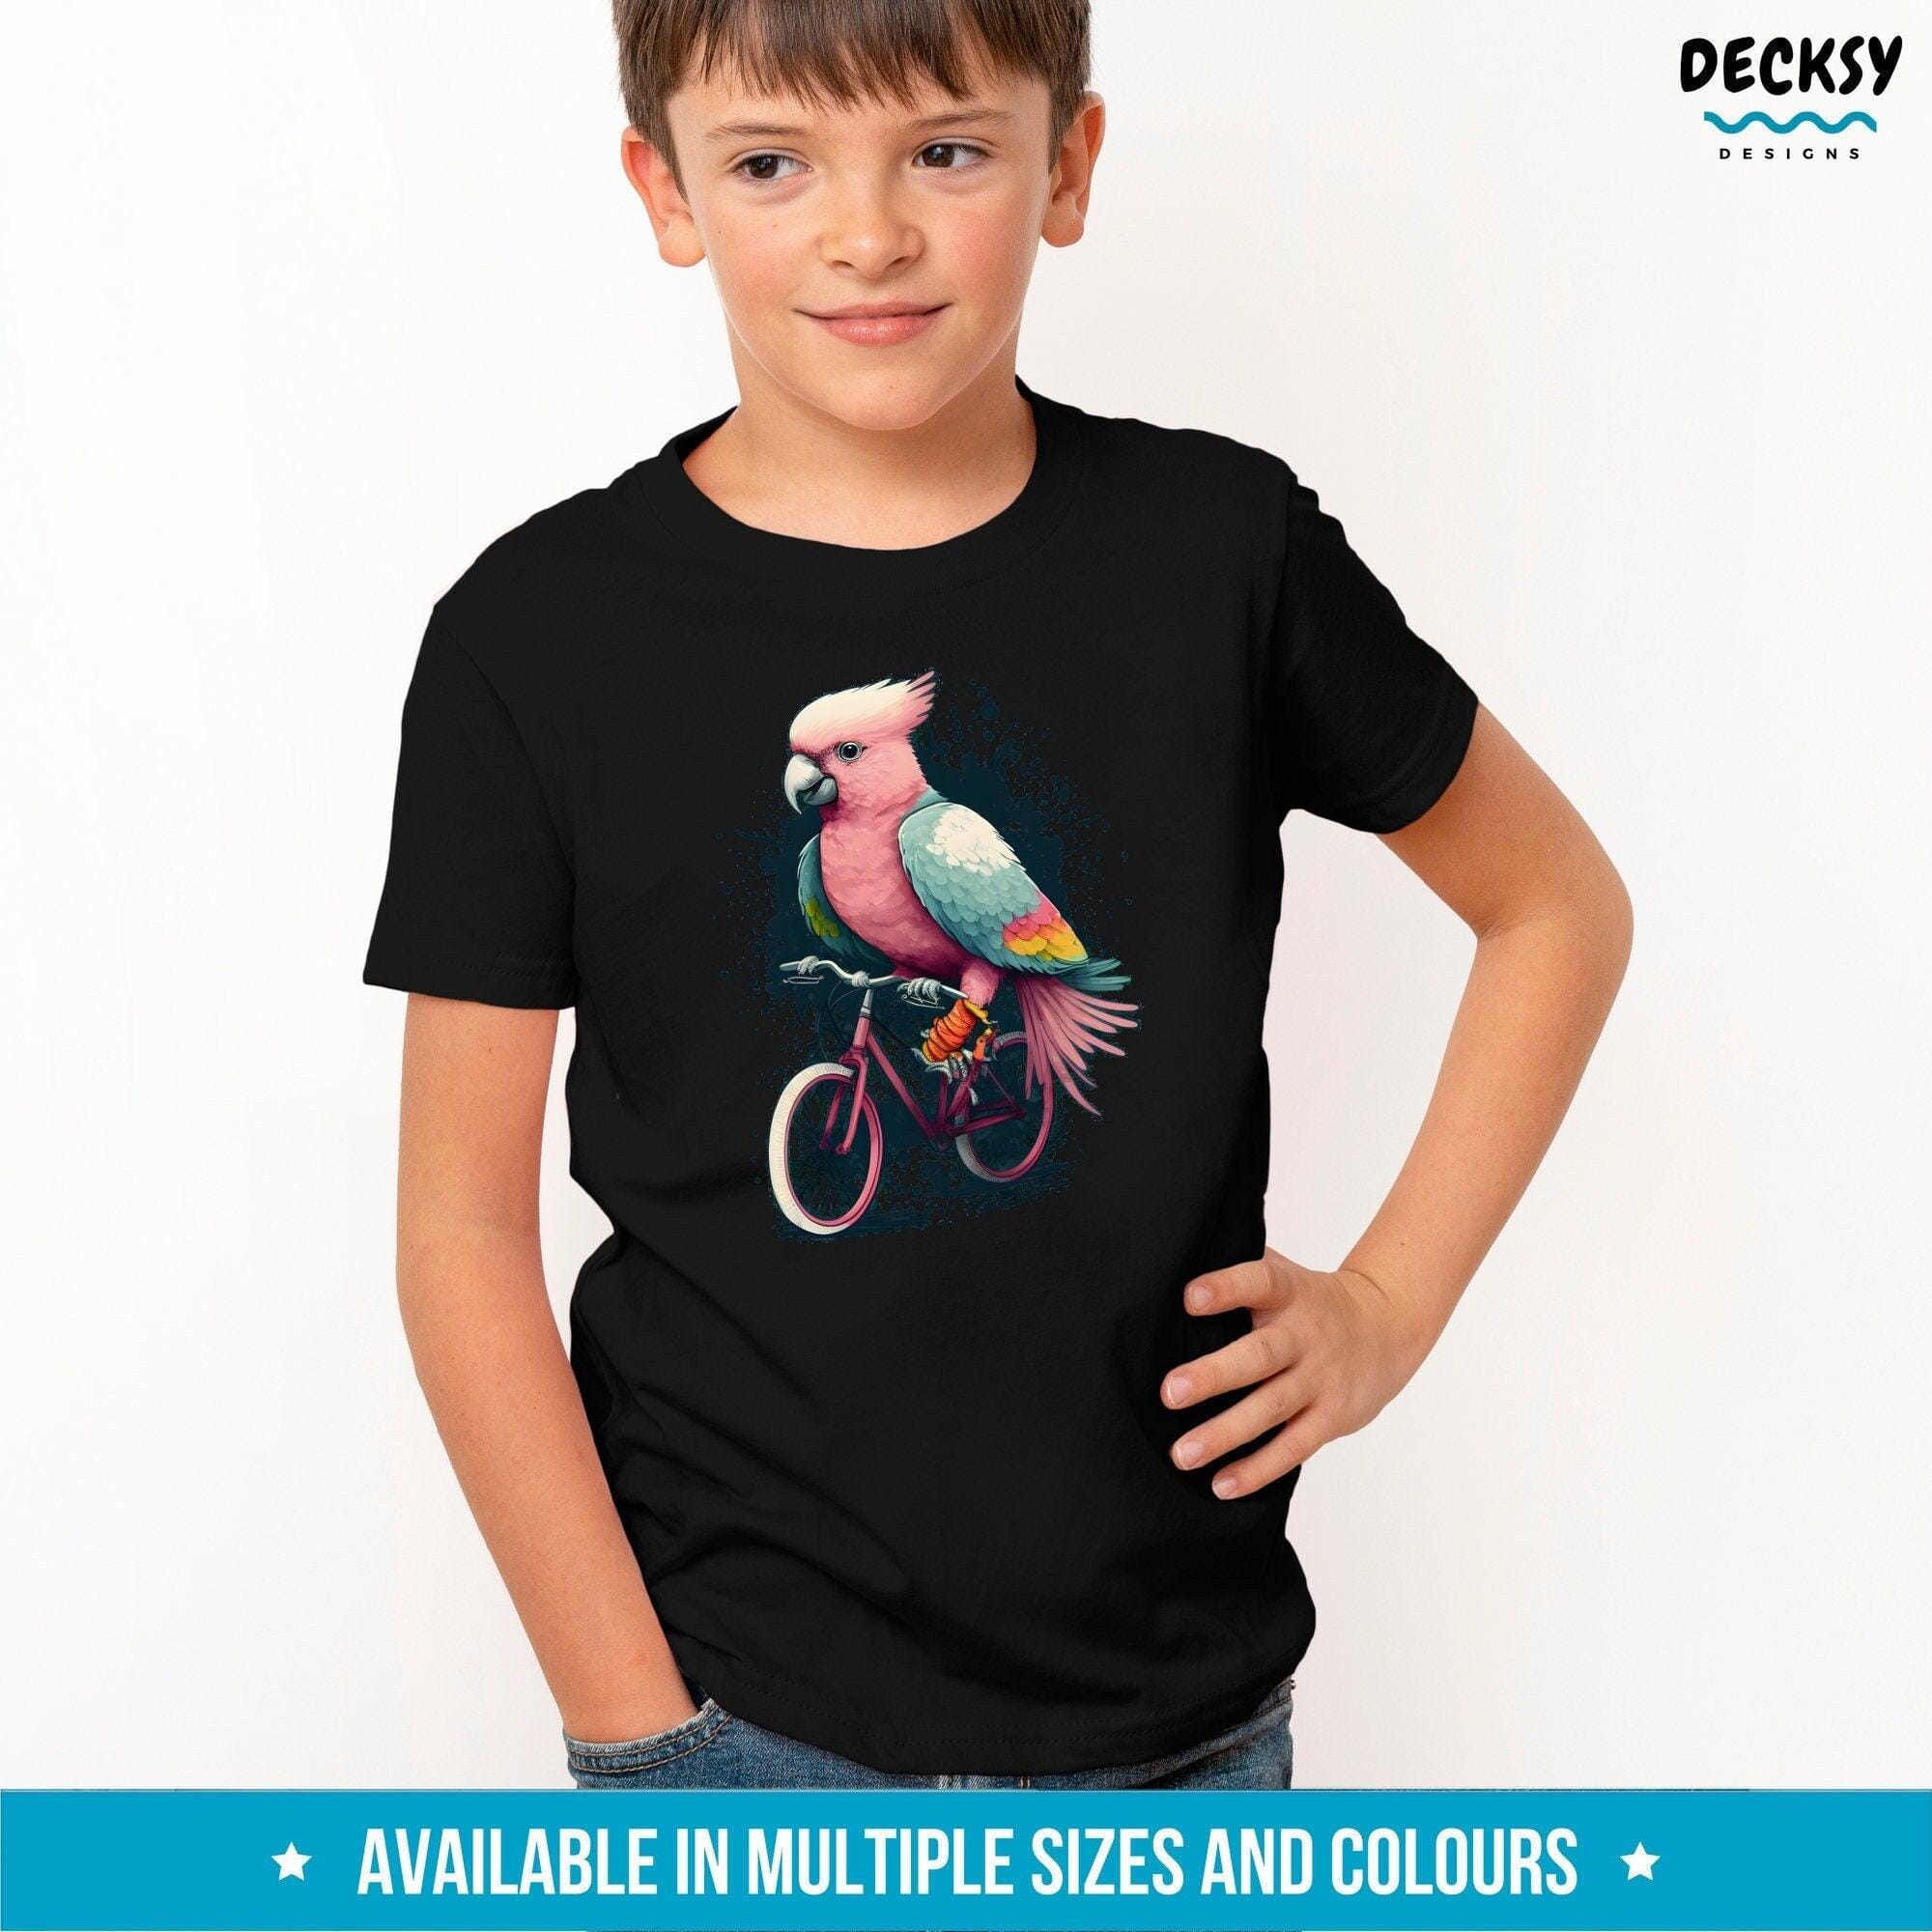 Galah Cockatoo Cycling Shirt Kids, Bike Lover Gift-Clothing:Gender-Neutral Adult Clothing:Tops & Tees:T-shirts:Graphic Tees-DecksyDesigns